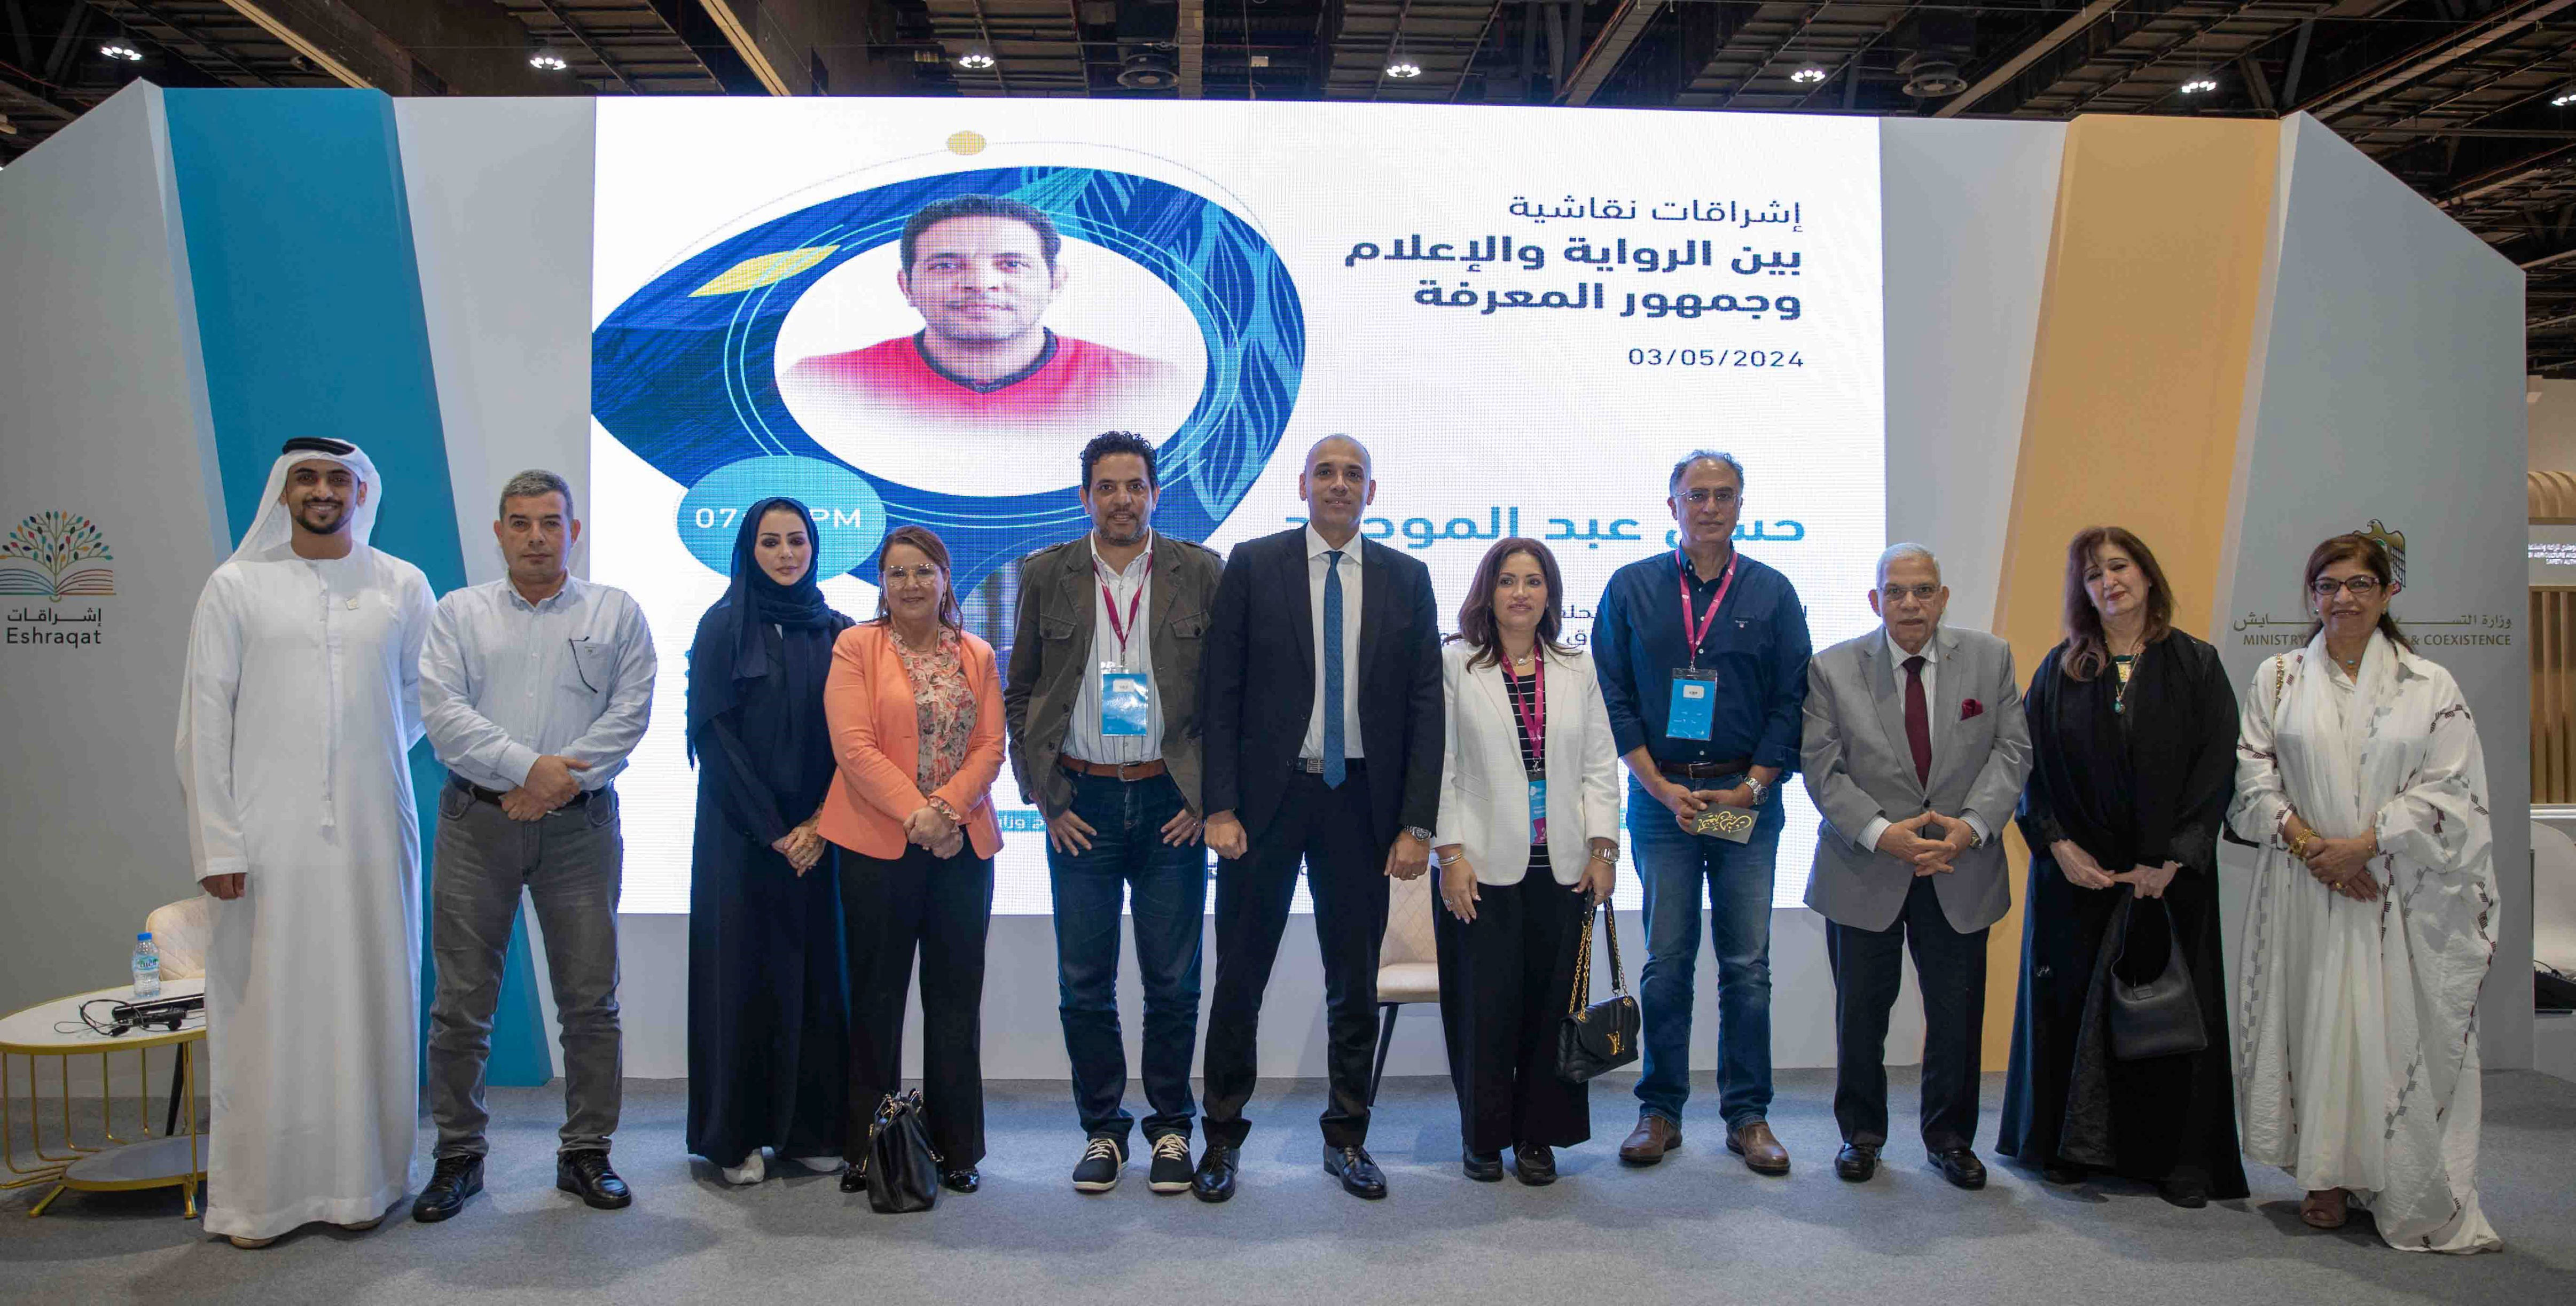 nahyan bin mubarak praises role of innovators in fostering human values